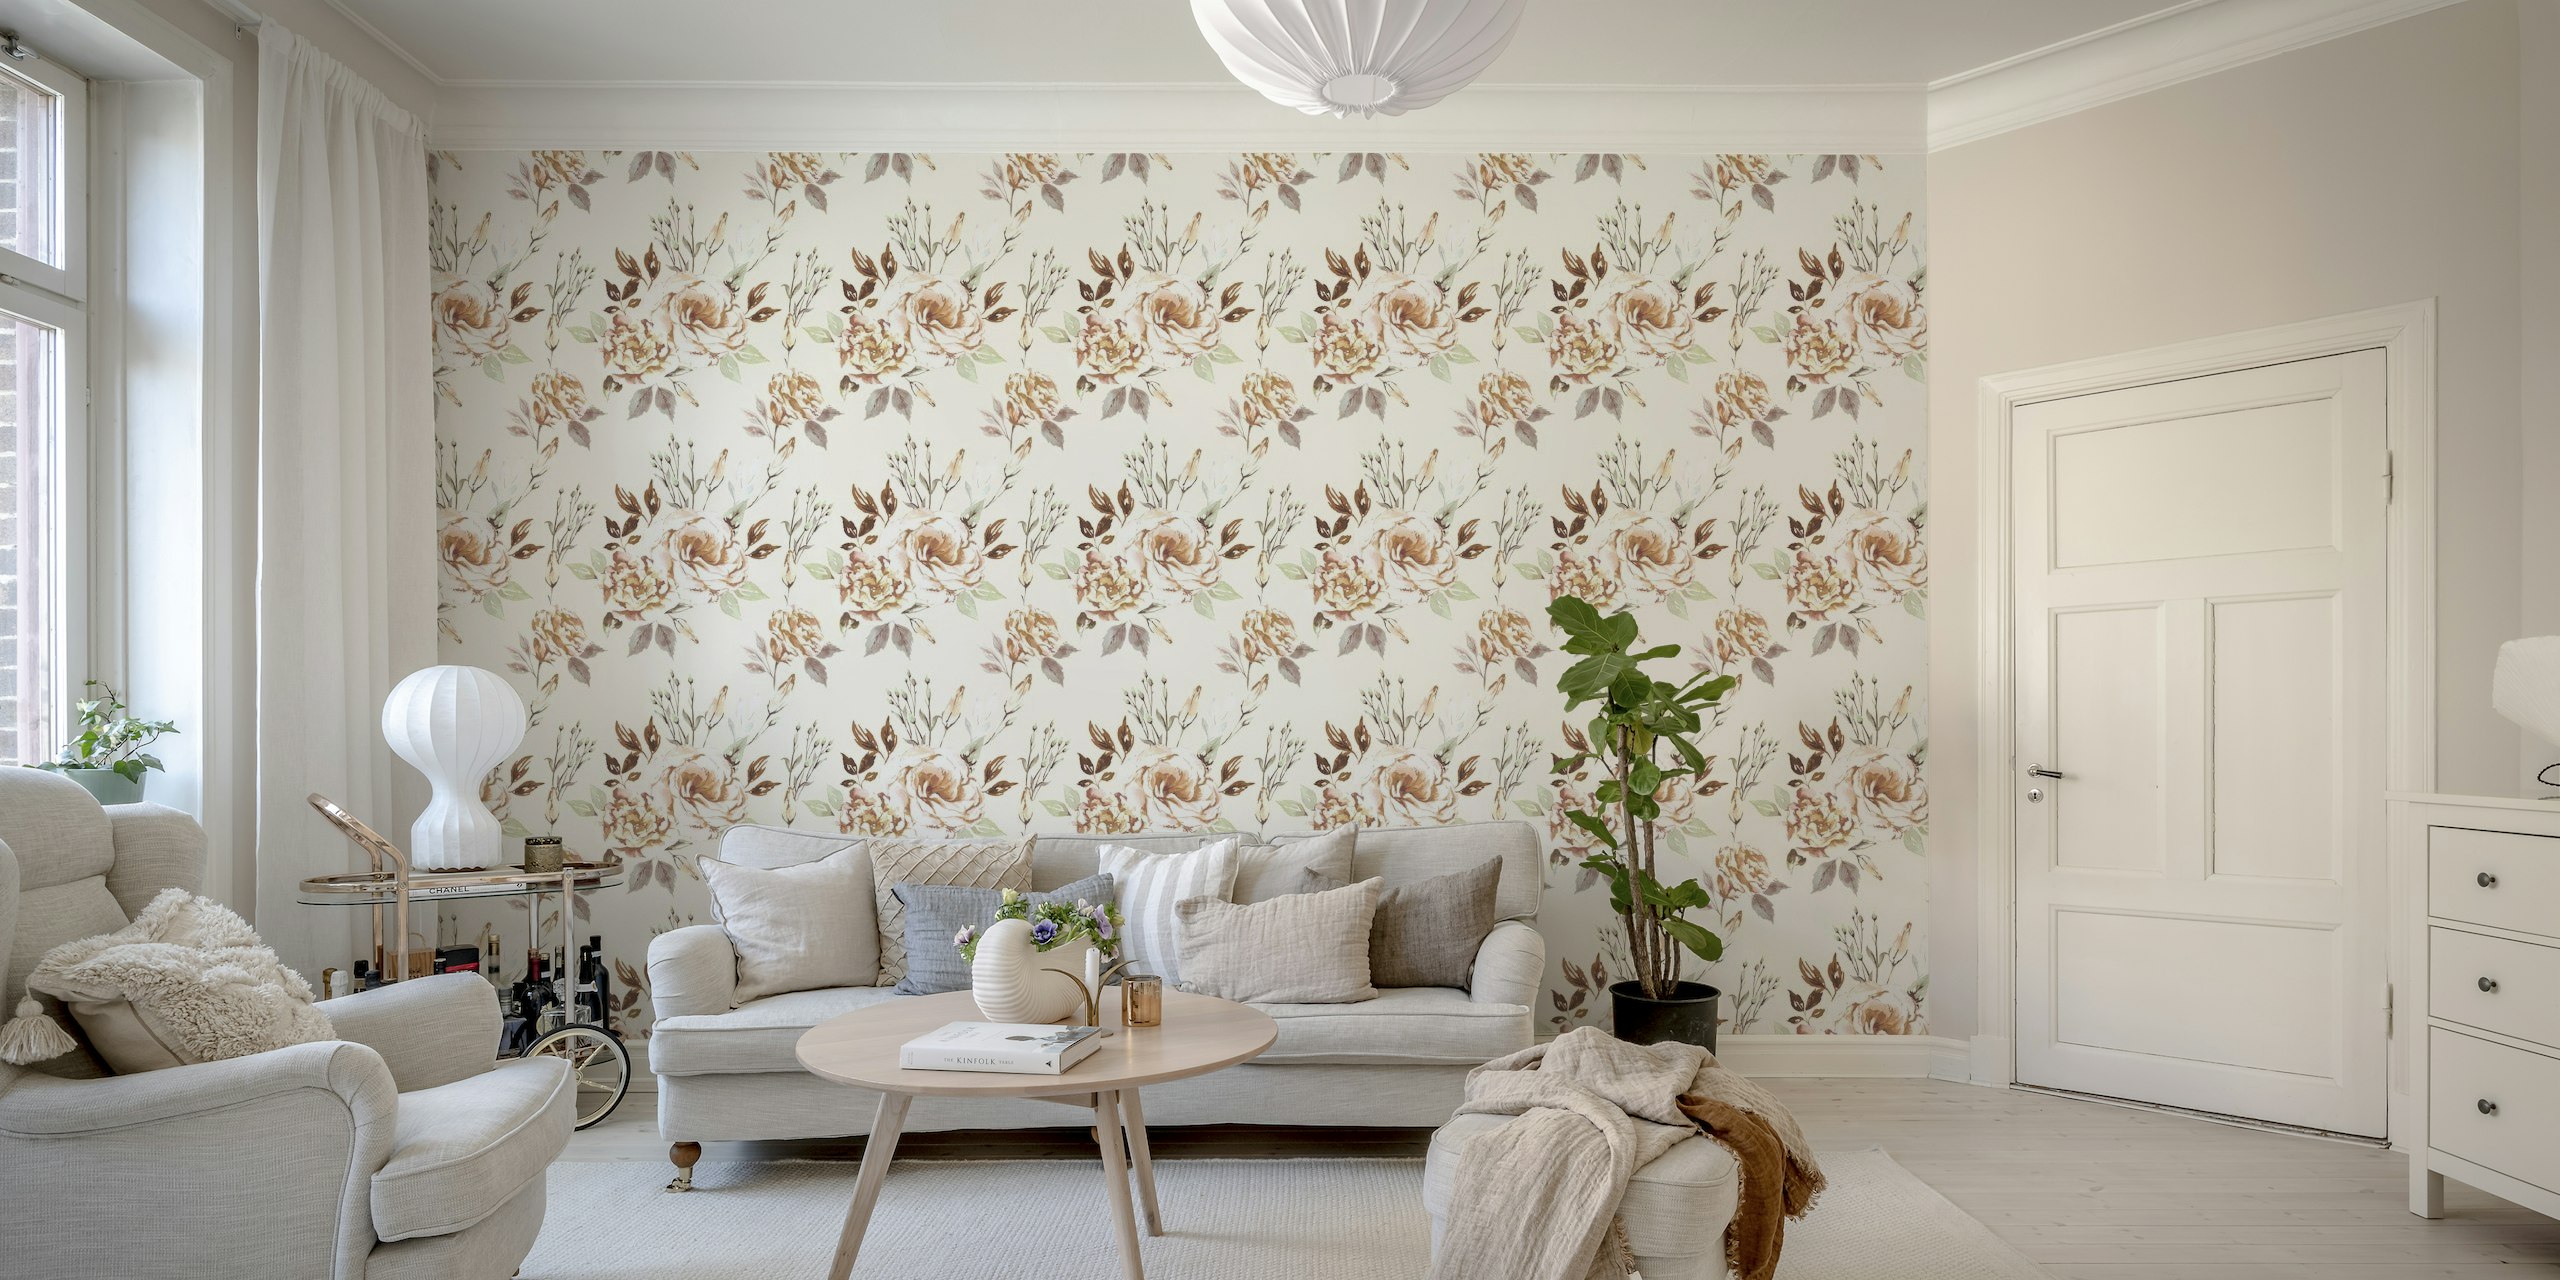 The Calm Watercolor Floral Lisianthus wallpaper